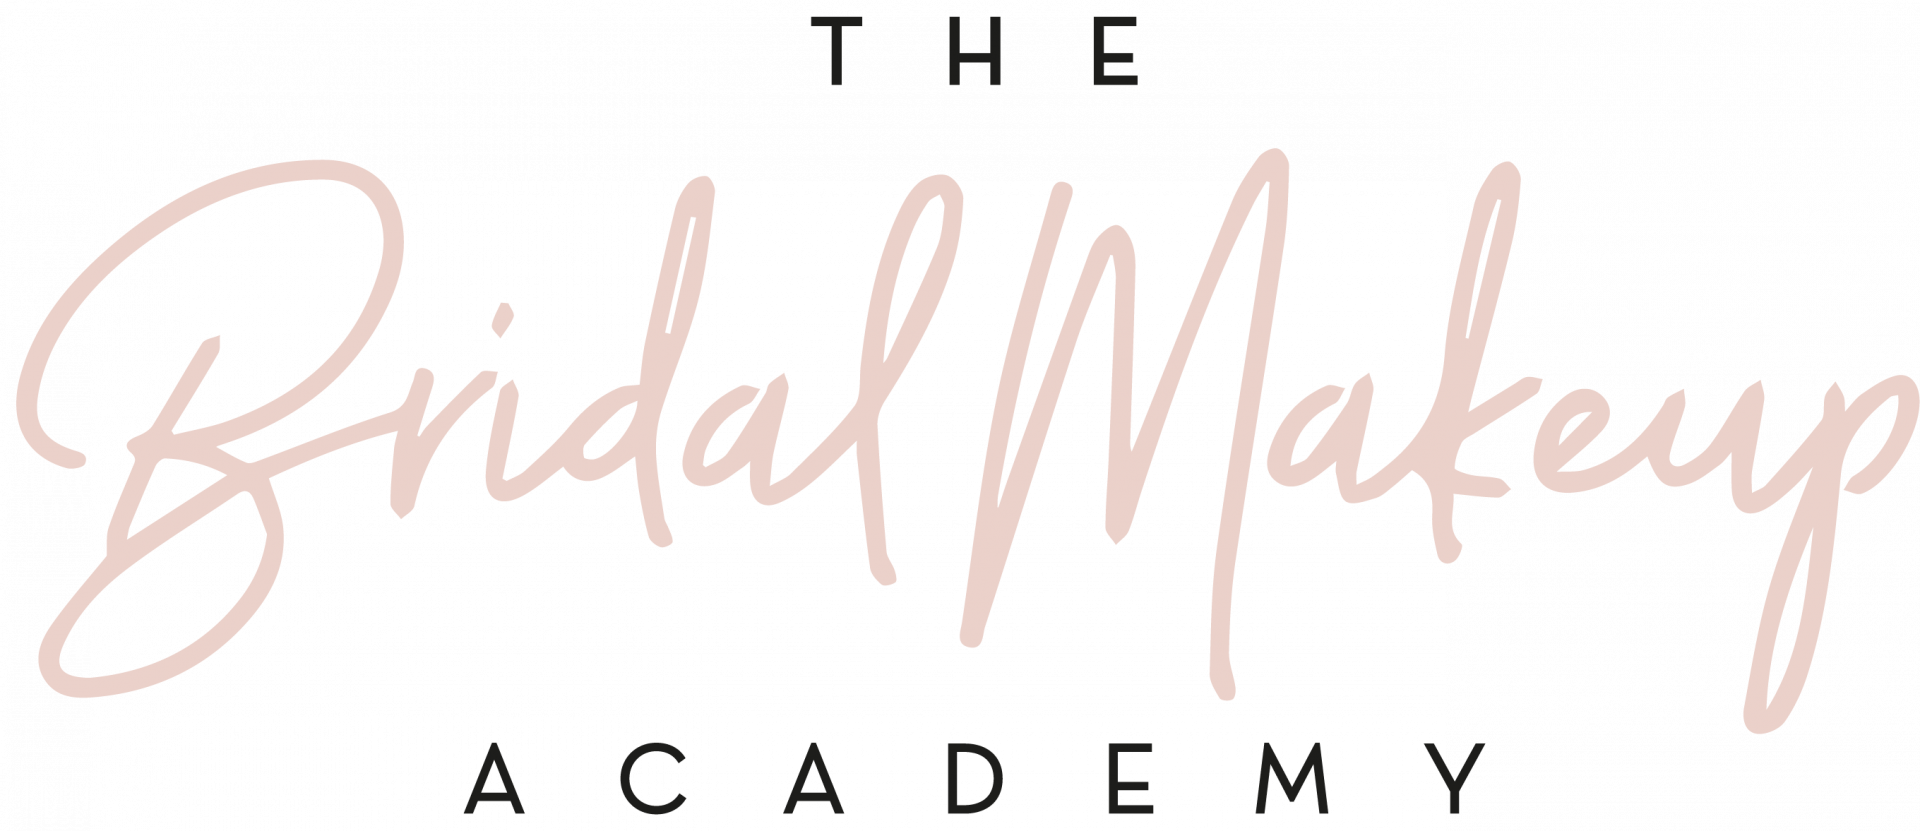 The Bridal Makeup Academy logo